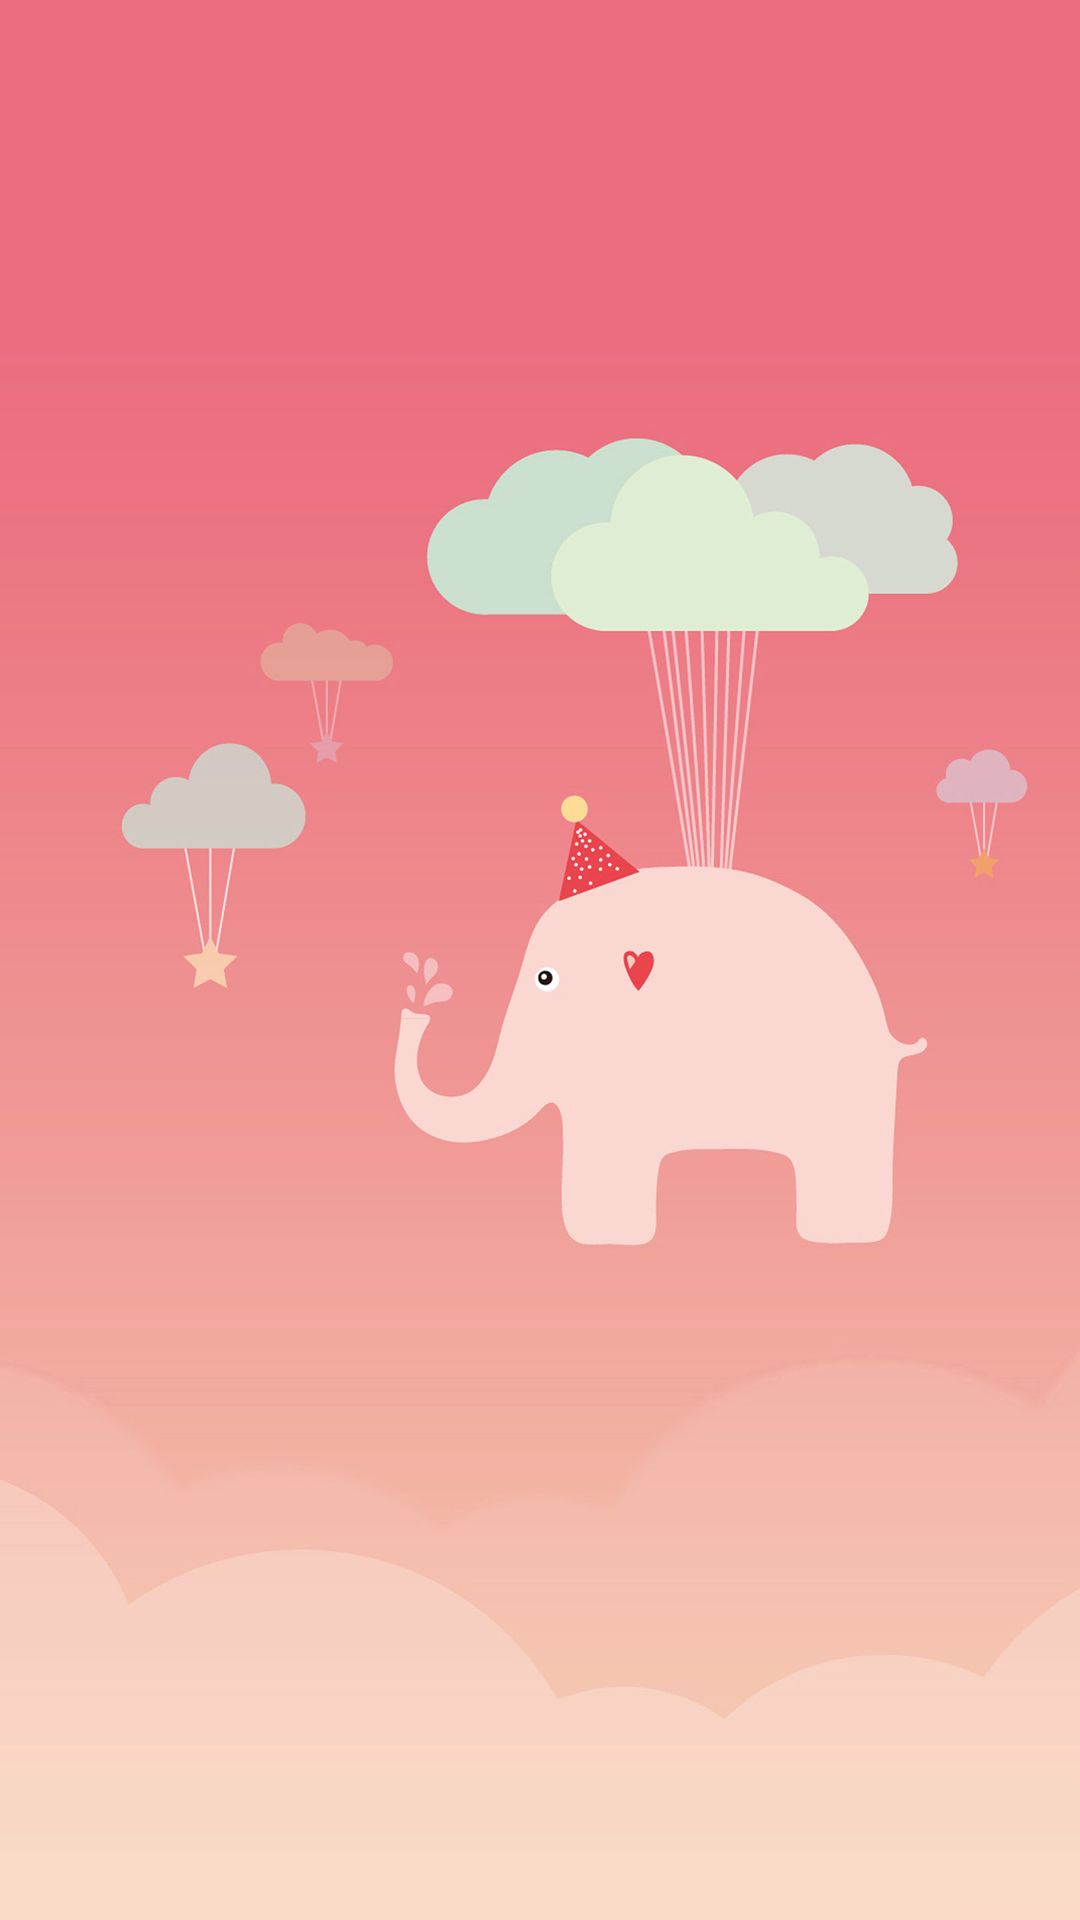 Cute Elephant iPhone 6 Wallpaper Download iPhone Wallpapers iPad